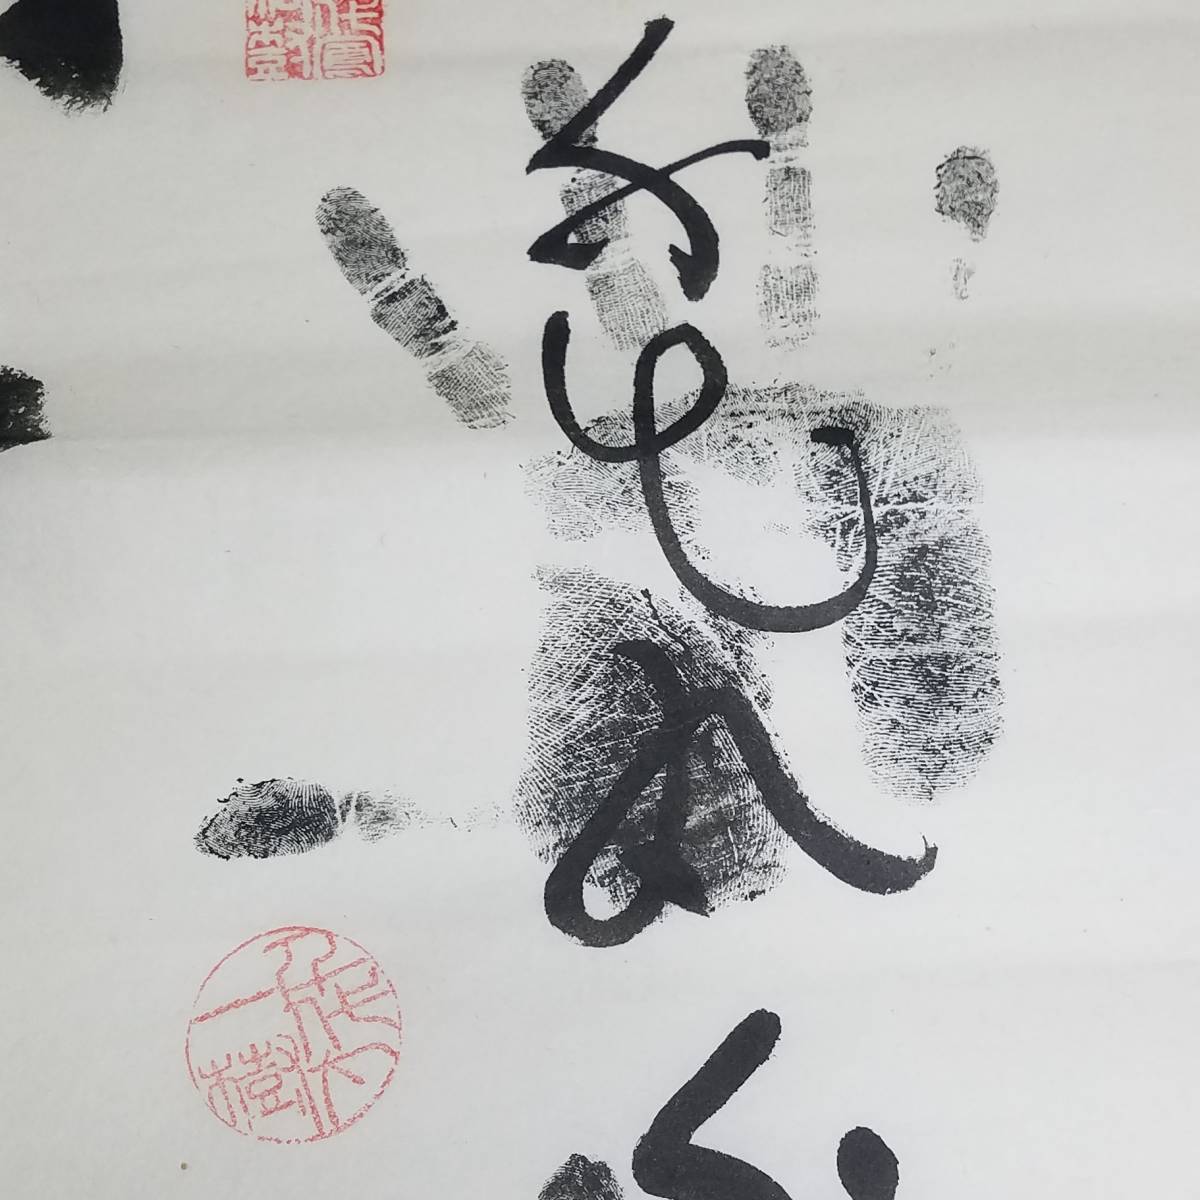  large sumo 9 -ply part shop 9 -ply parent person with autograph hand-print 